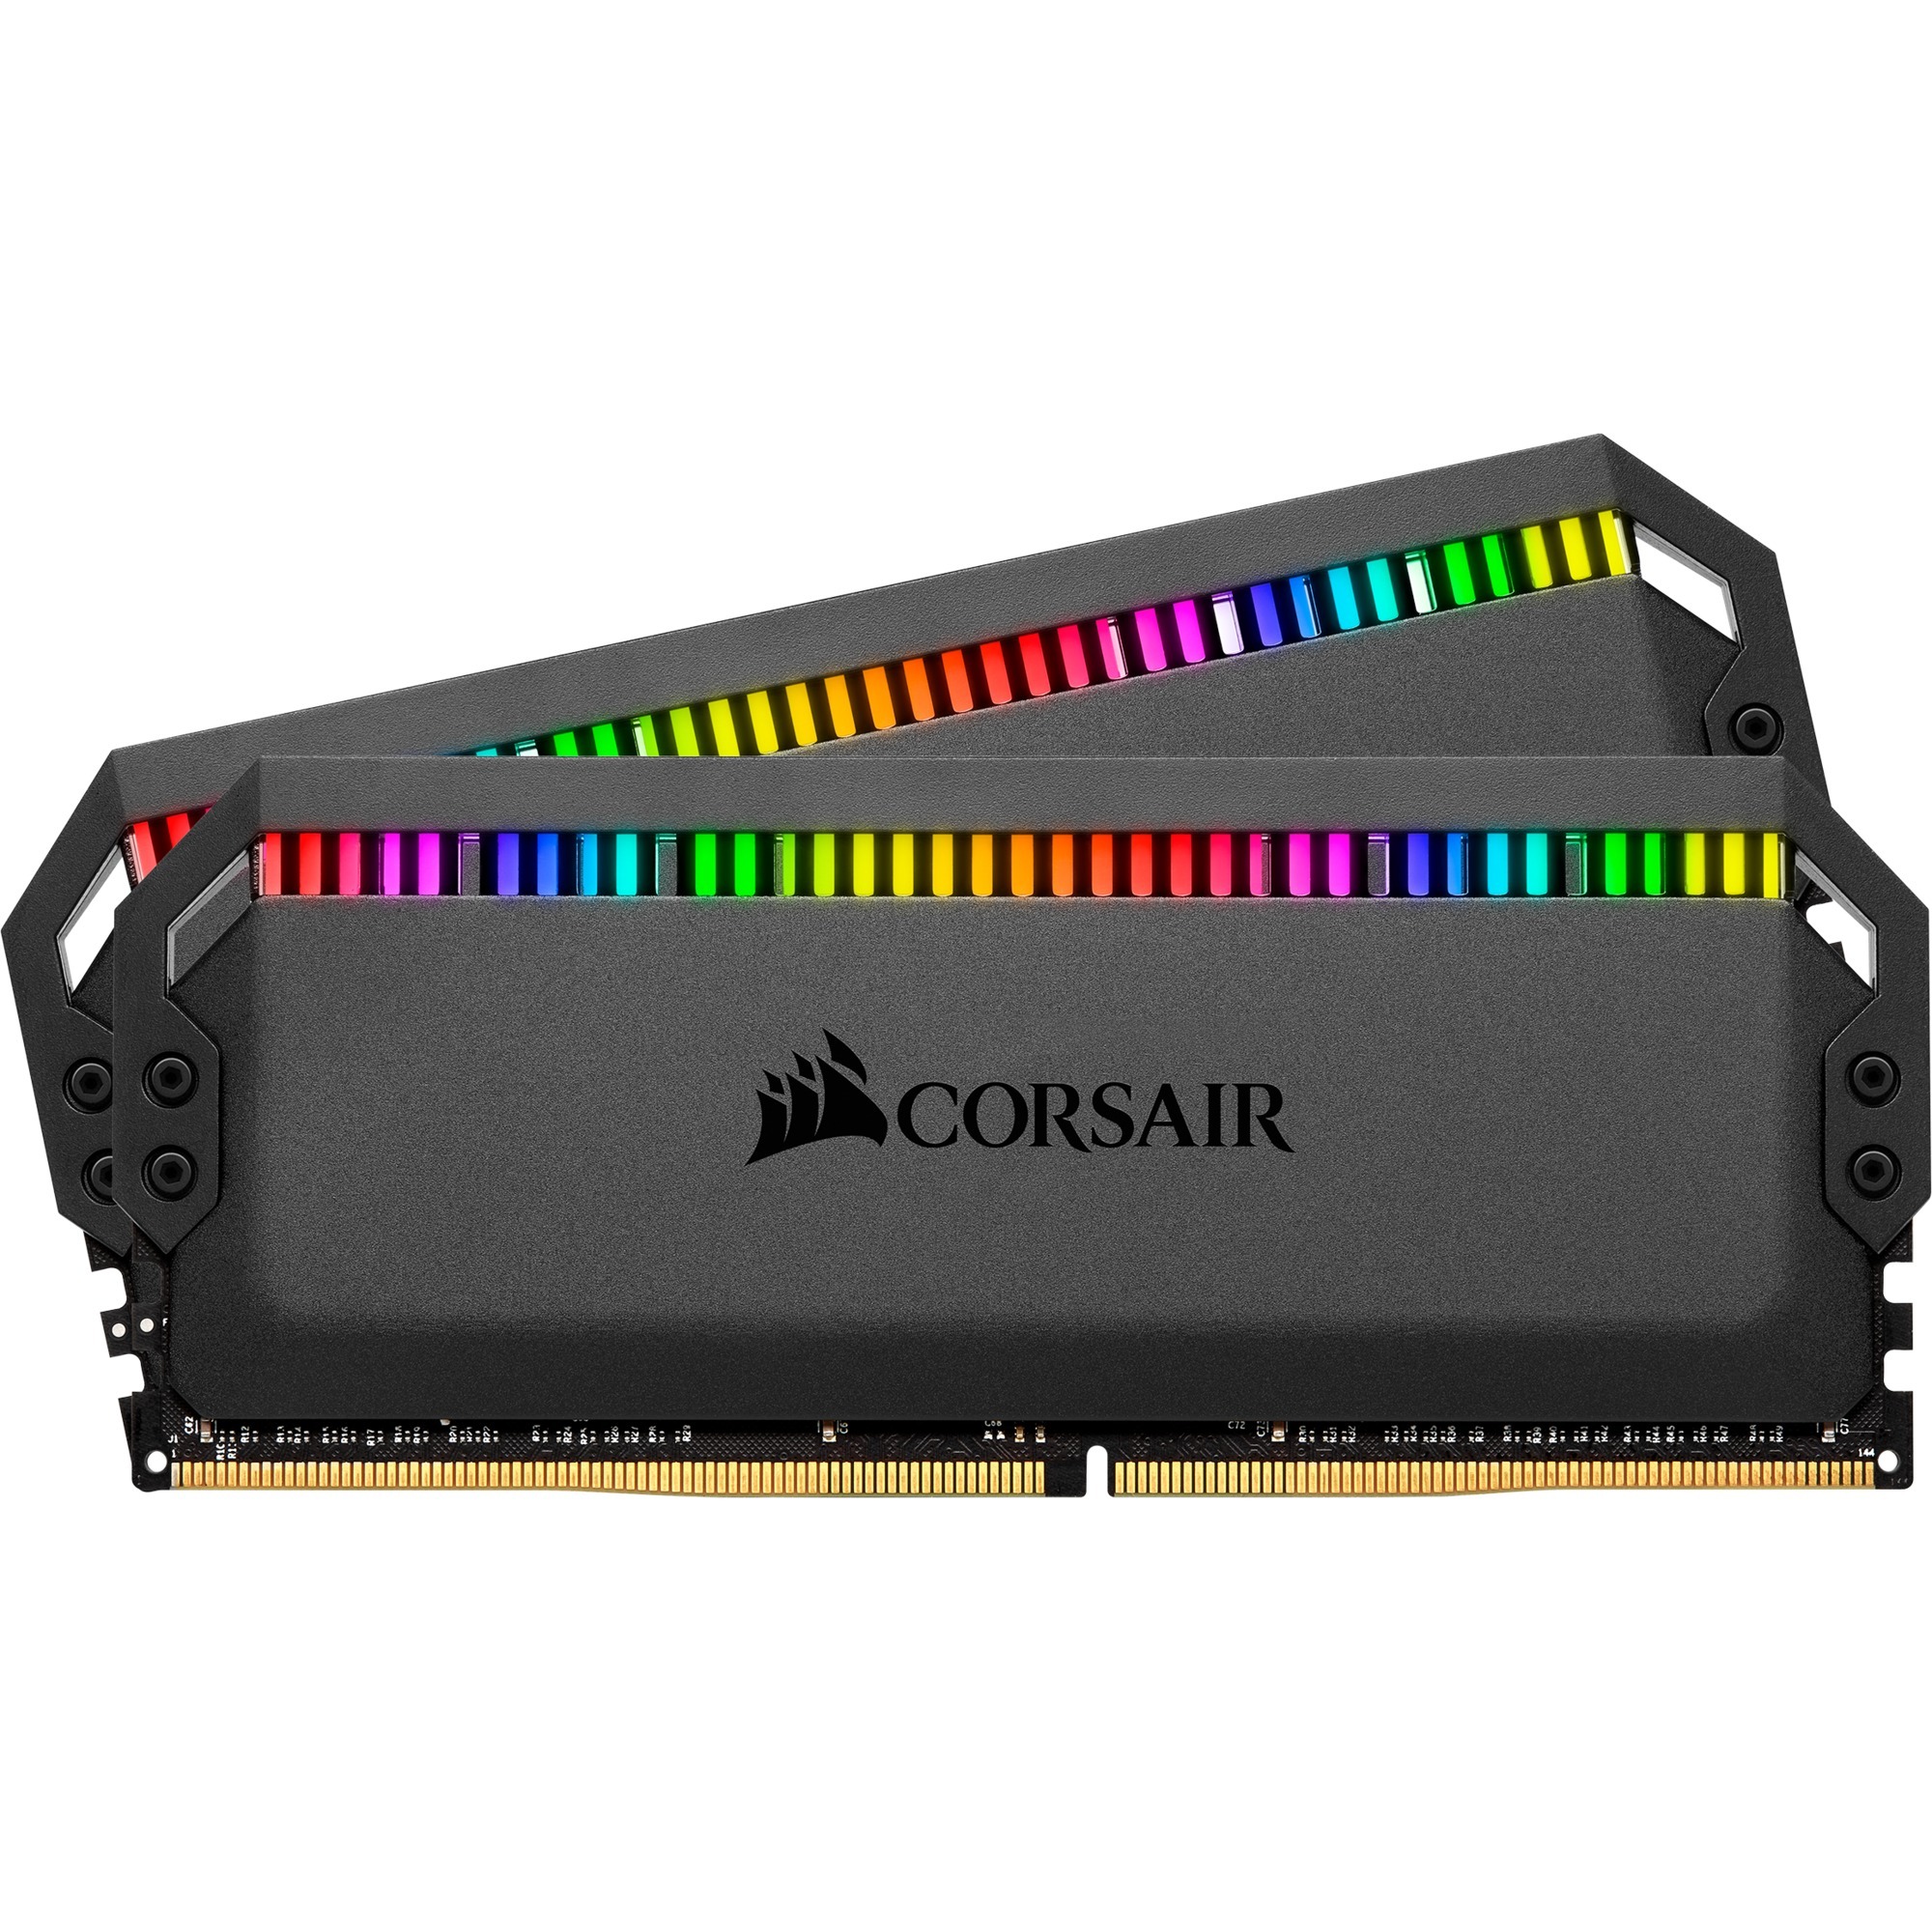 Corsair Dominator Platinum RGB 16GB (2x8GB) DDR4 3200MHz C16 Enthusiast RGB LED-Beleuchtung Arbeitsspeicher, schwarz